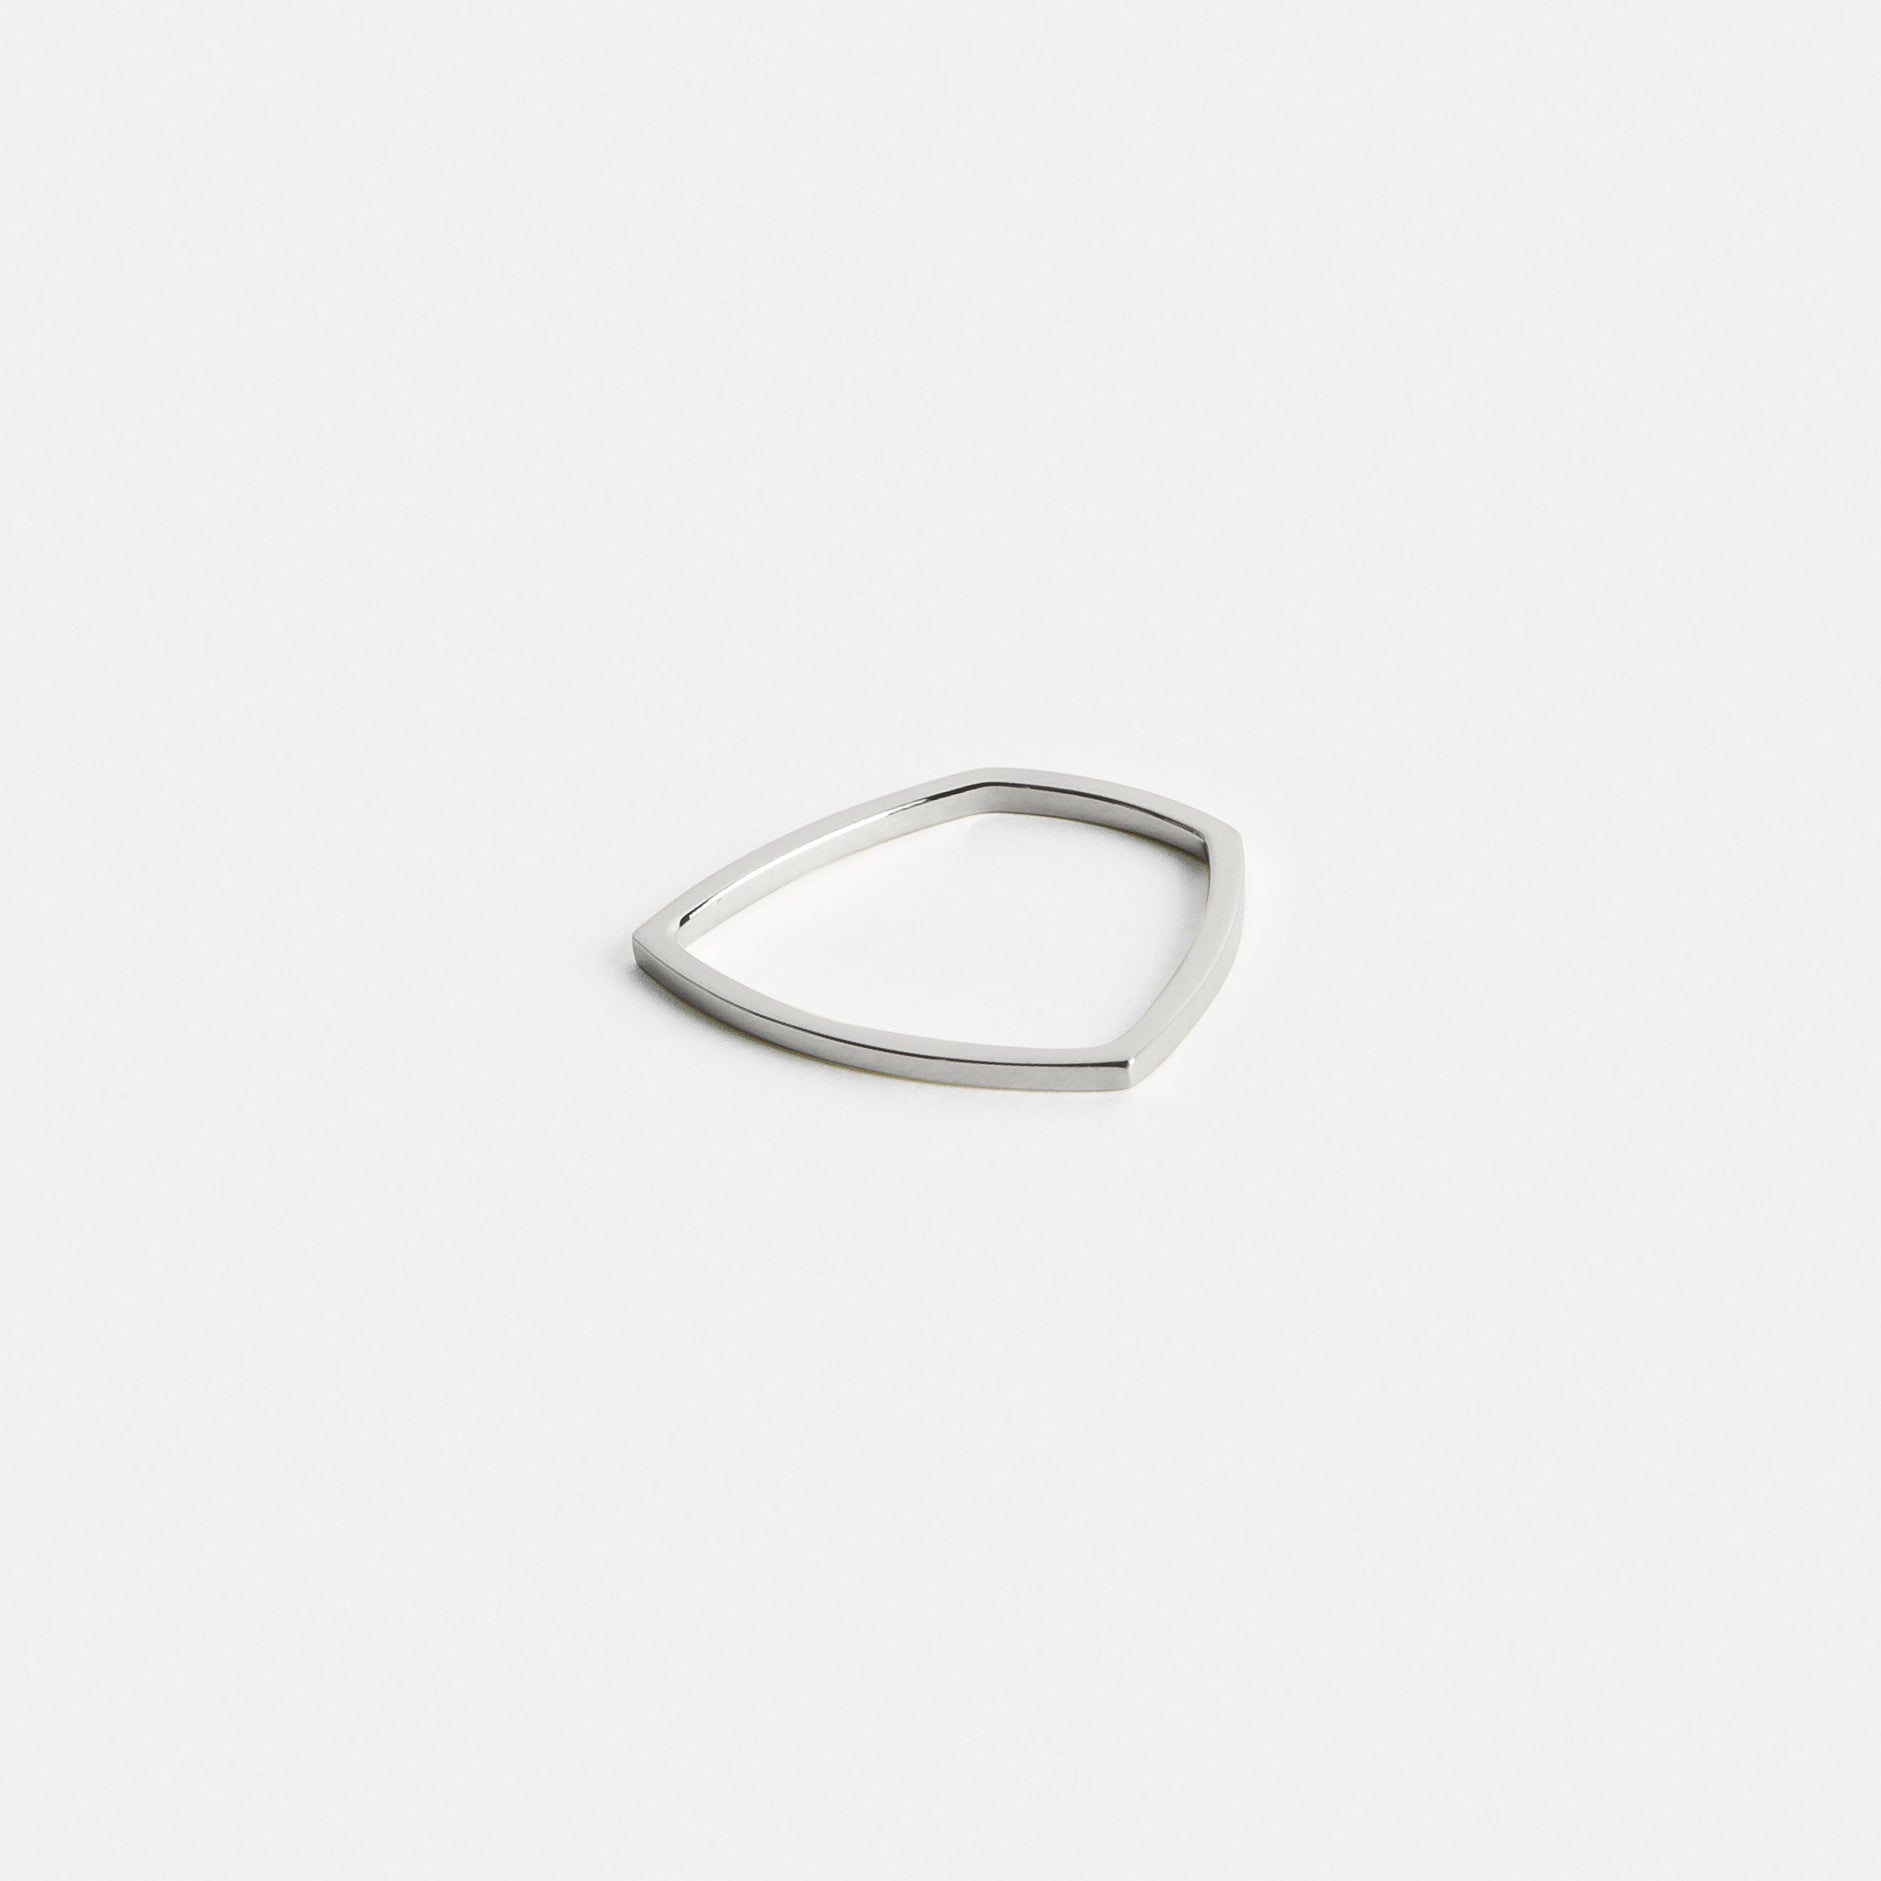 Ilga Designer Ring in 14k White Gold by SHW Fine Jewelry in NYC